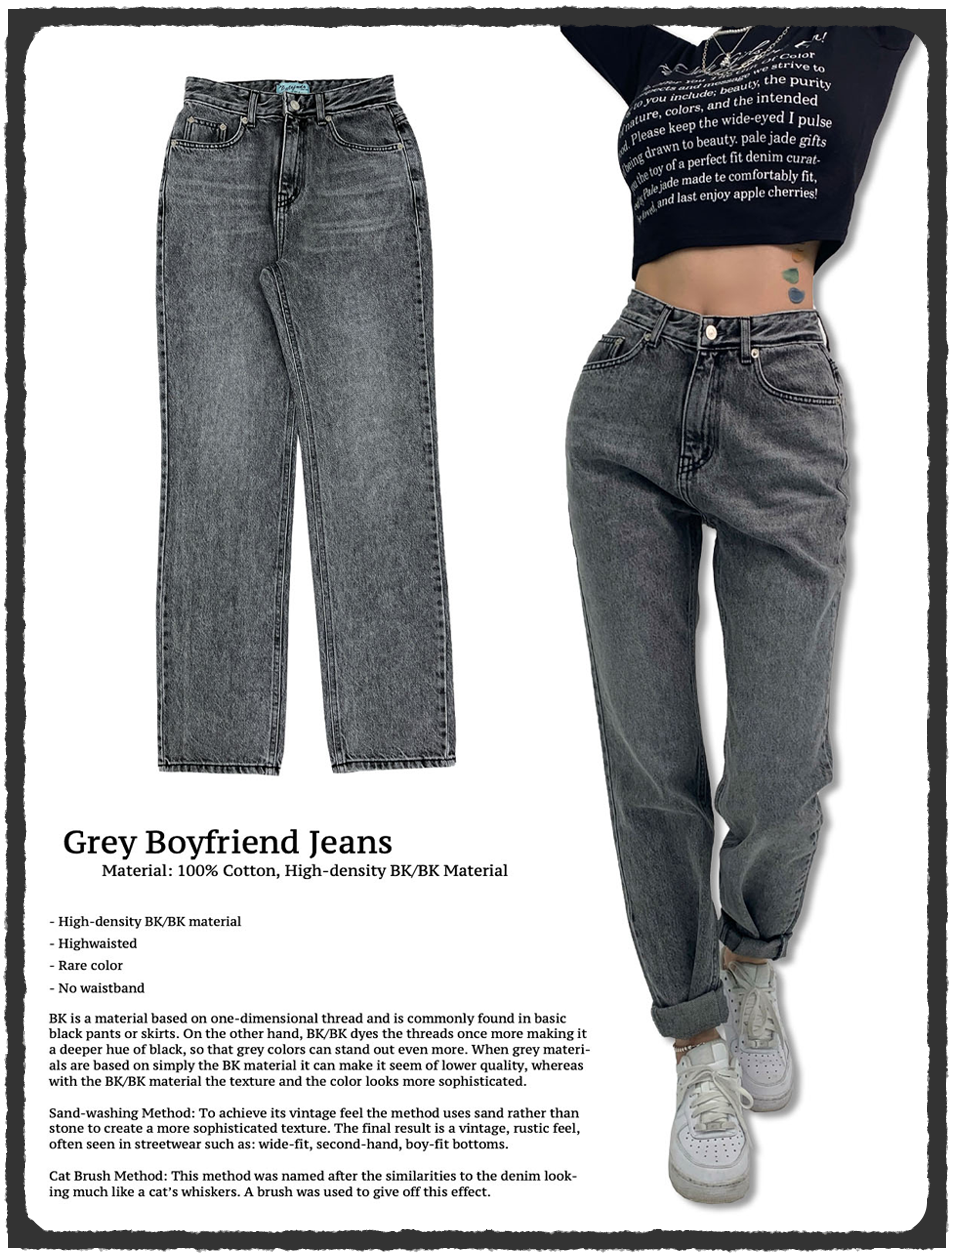 Grey Boyfriend Jeans